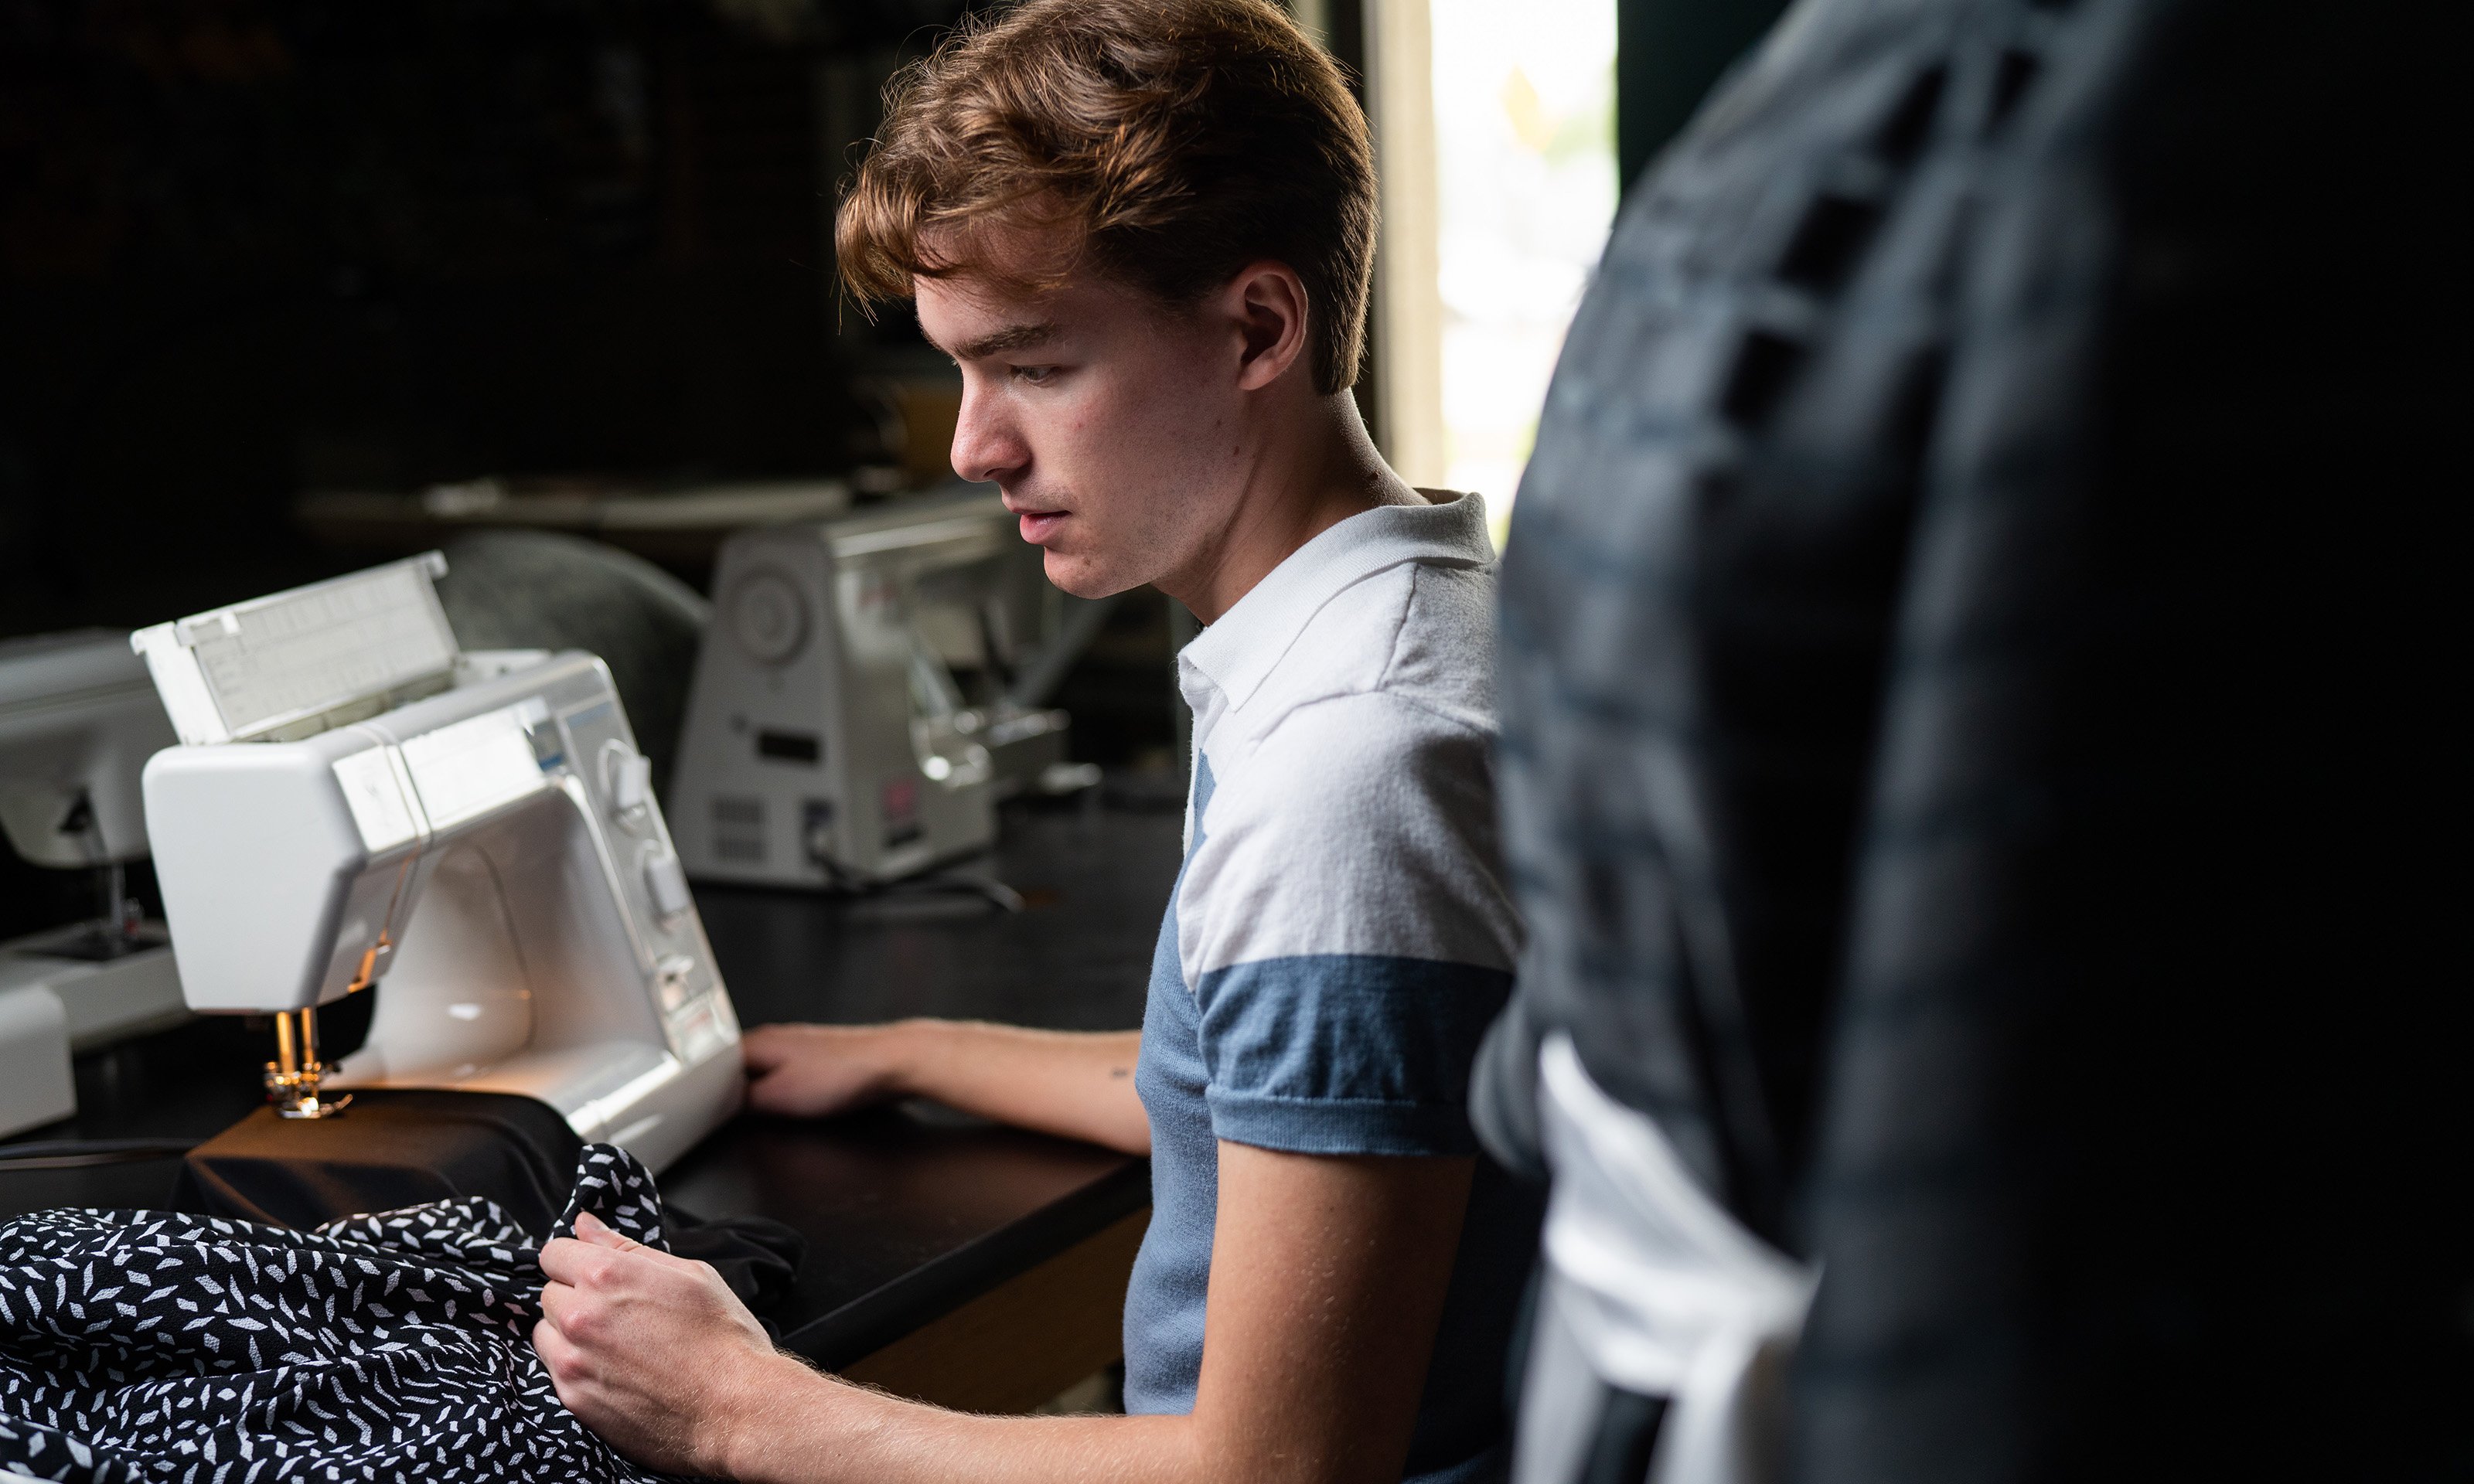 Student sitting at sewing machine